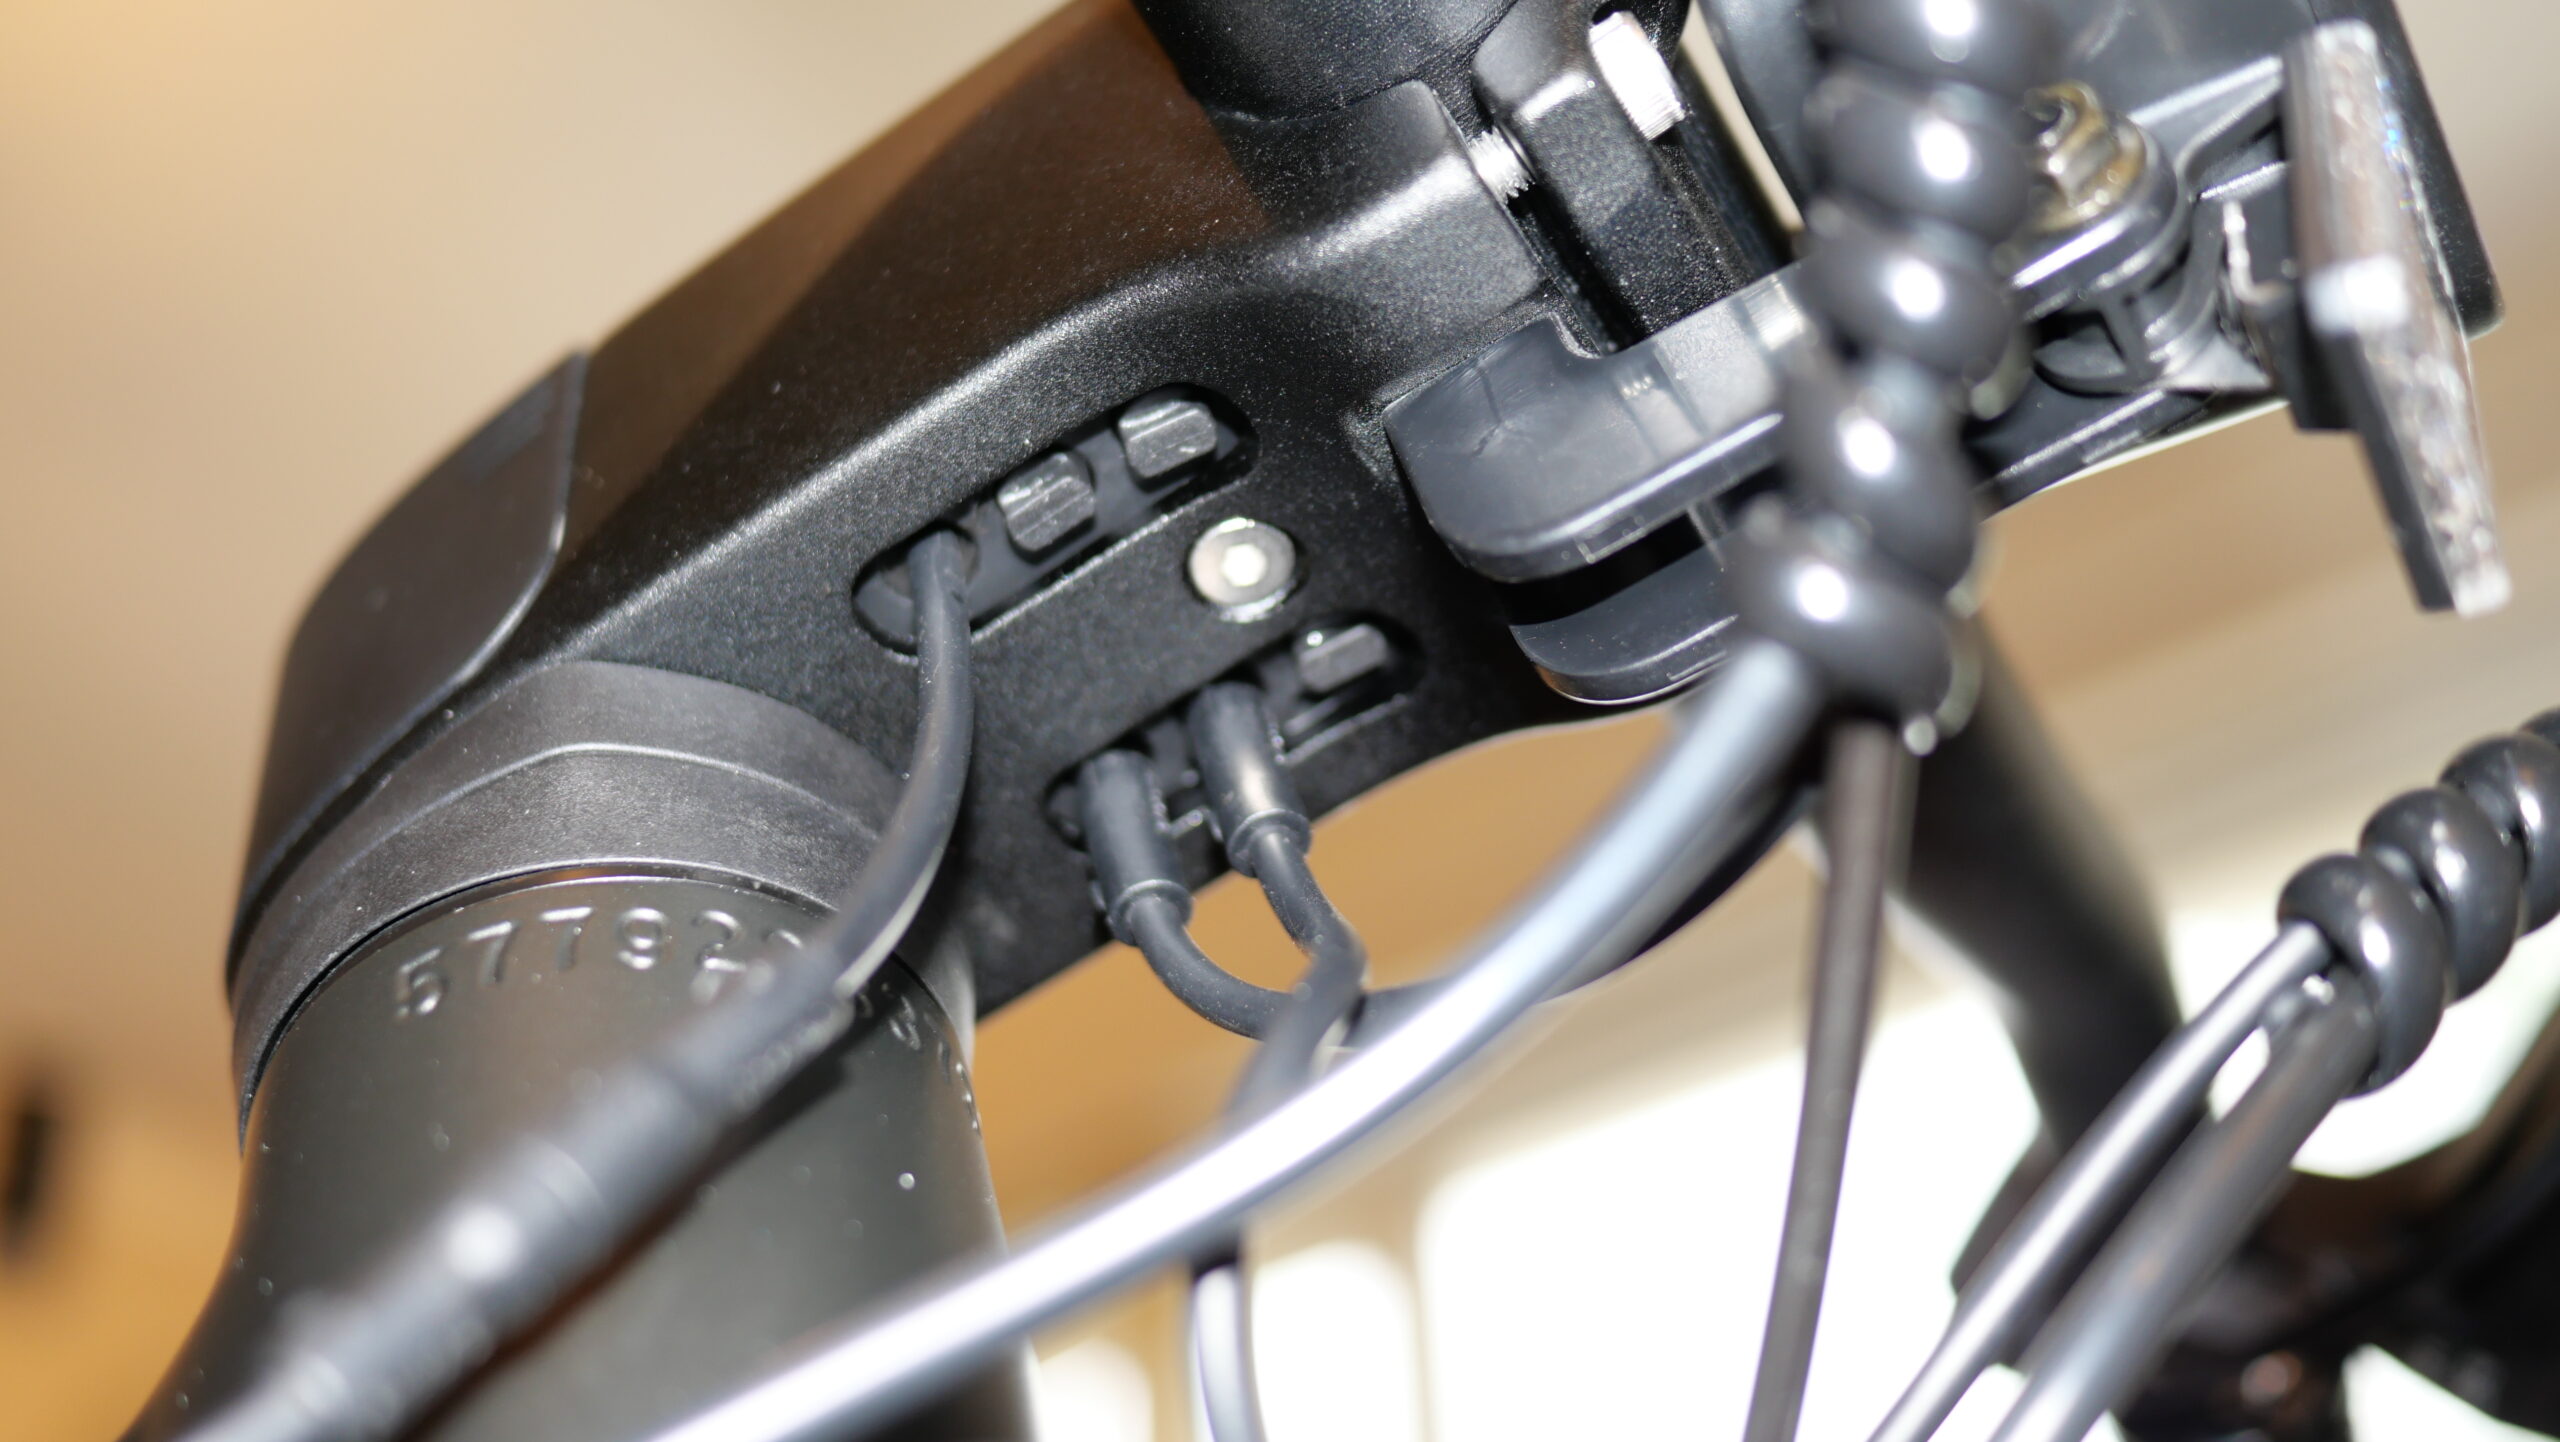 Underneath the Control Panel of the Fiido C21 Pro e-Gravel Bike.